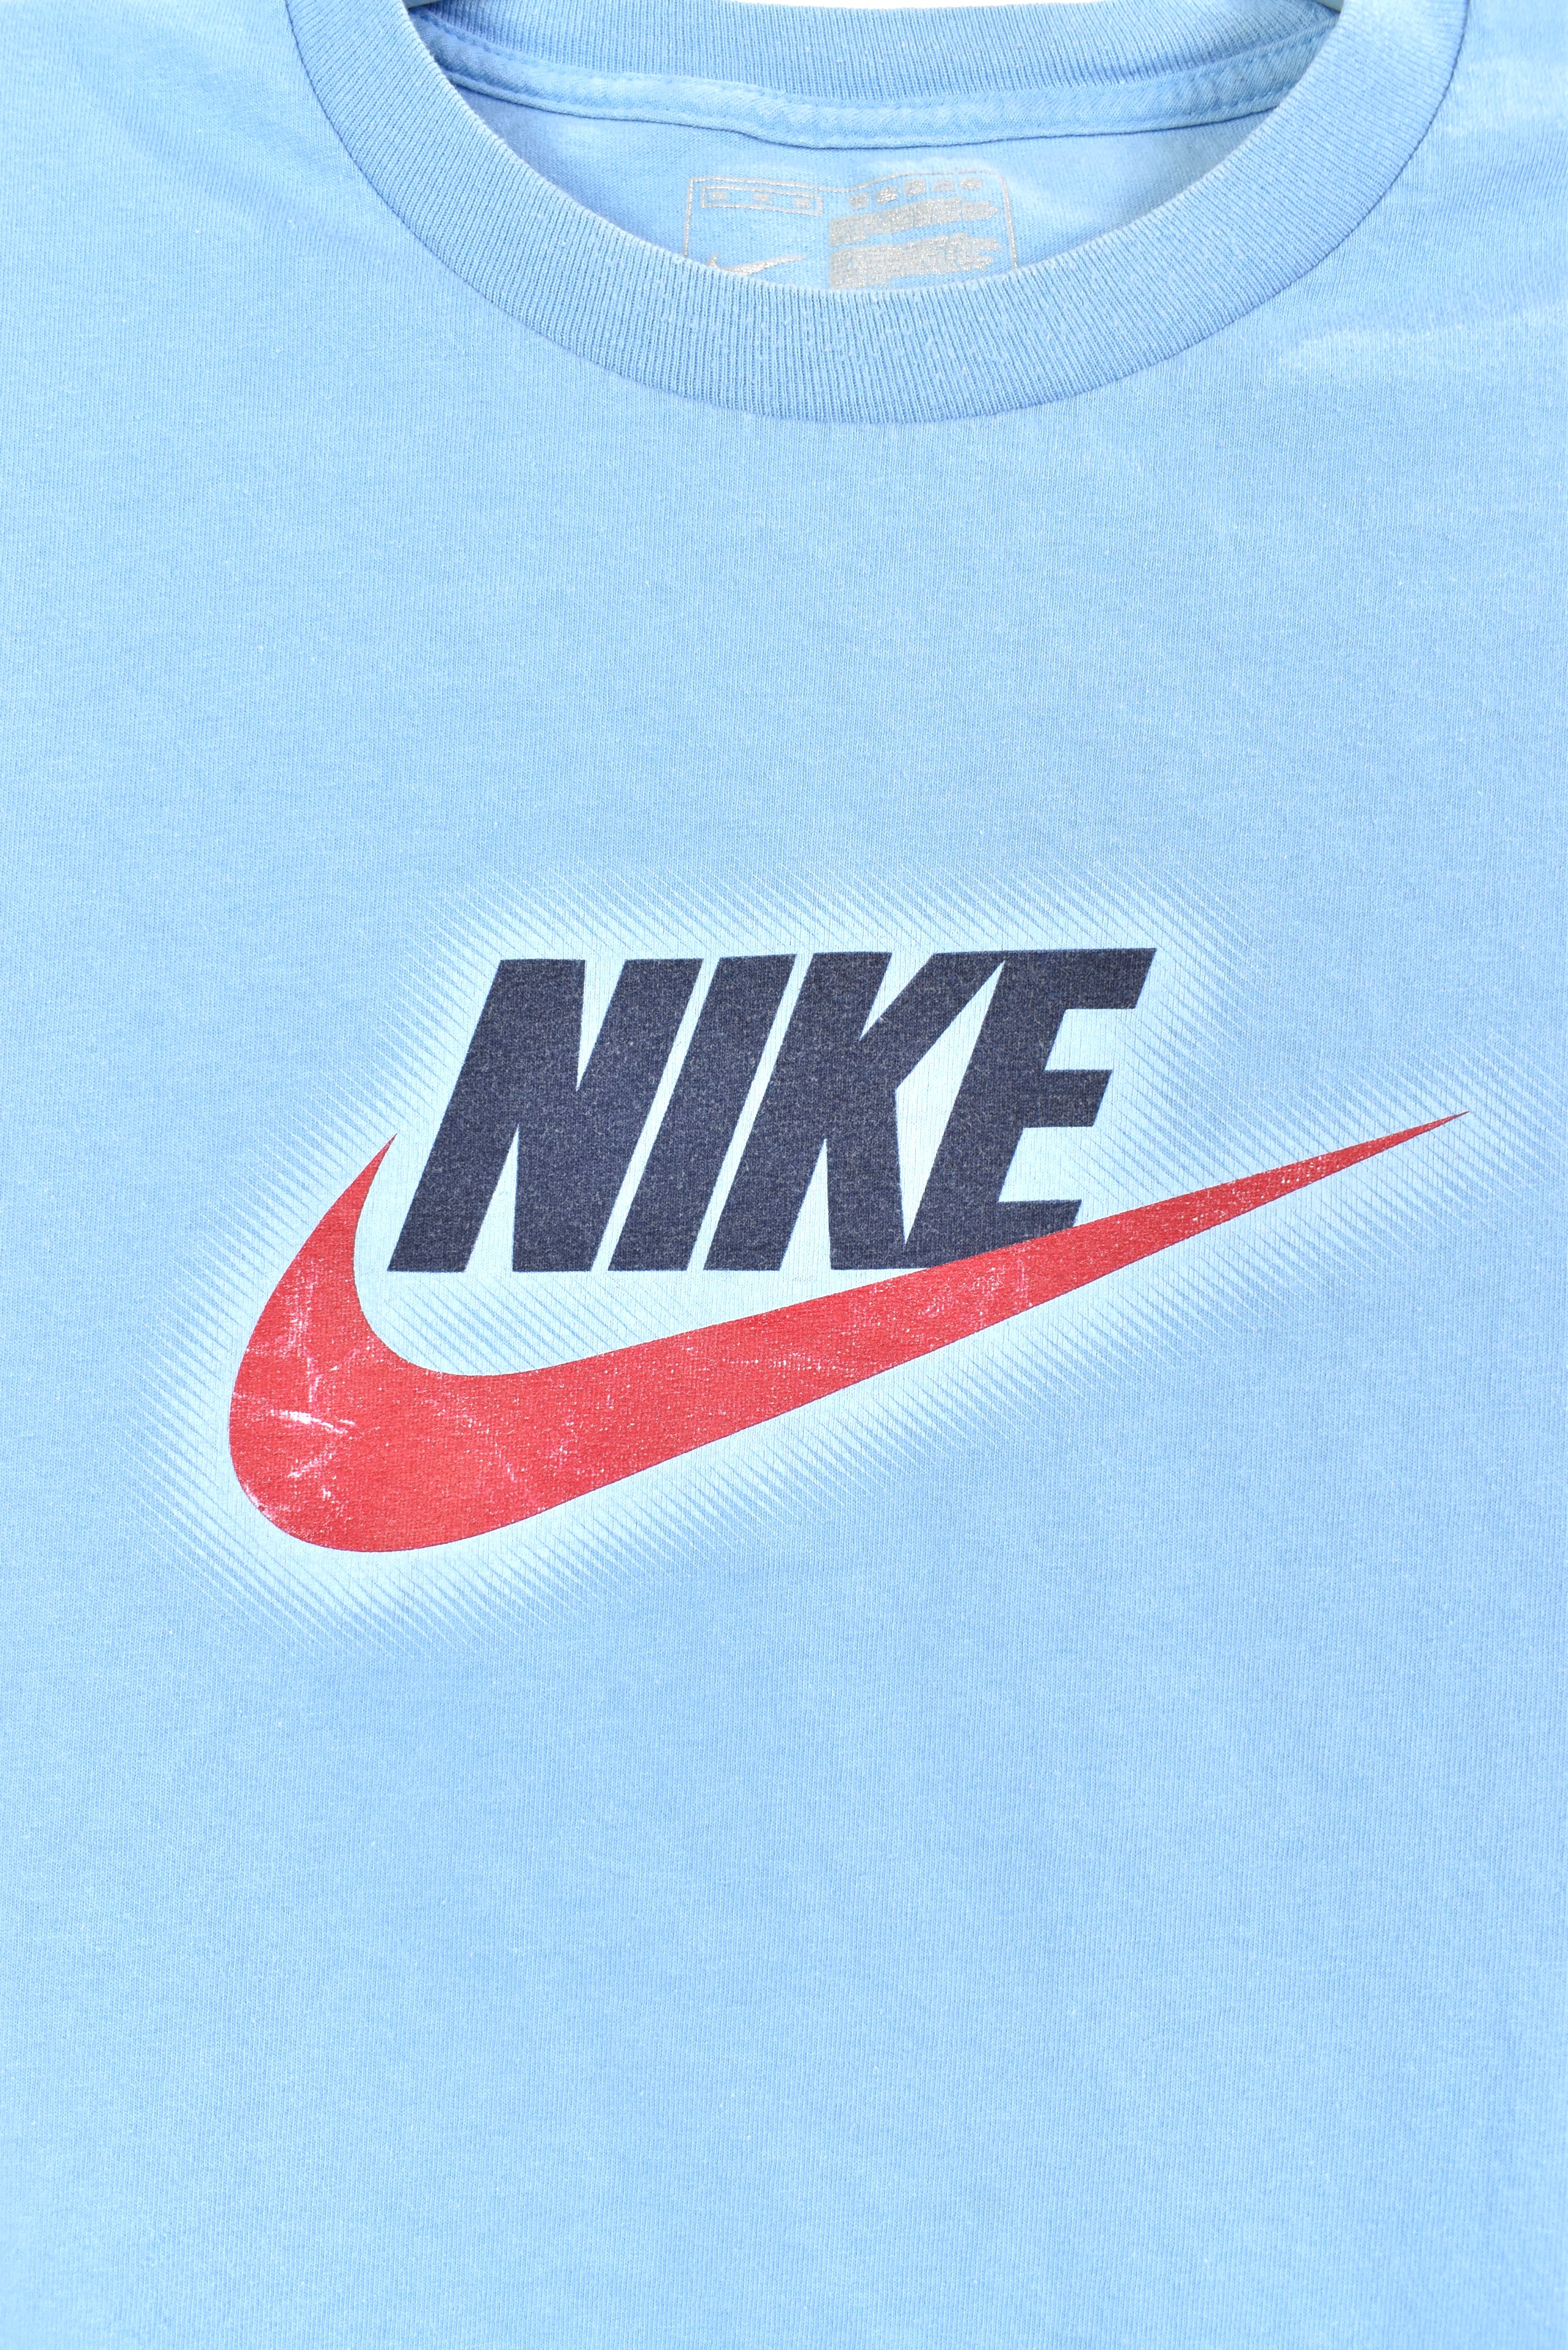 Vintage Nike shirt, big logo swoosh graphic tee - XL. light blue NIKE